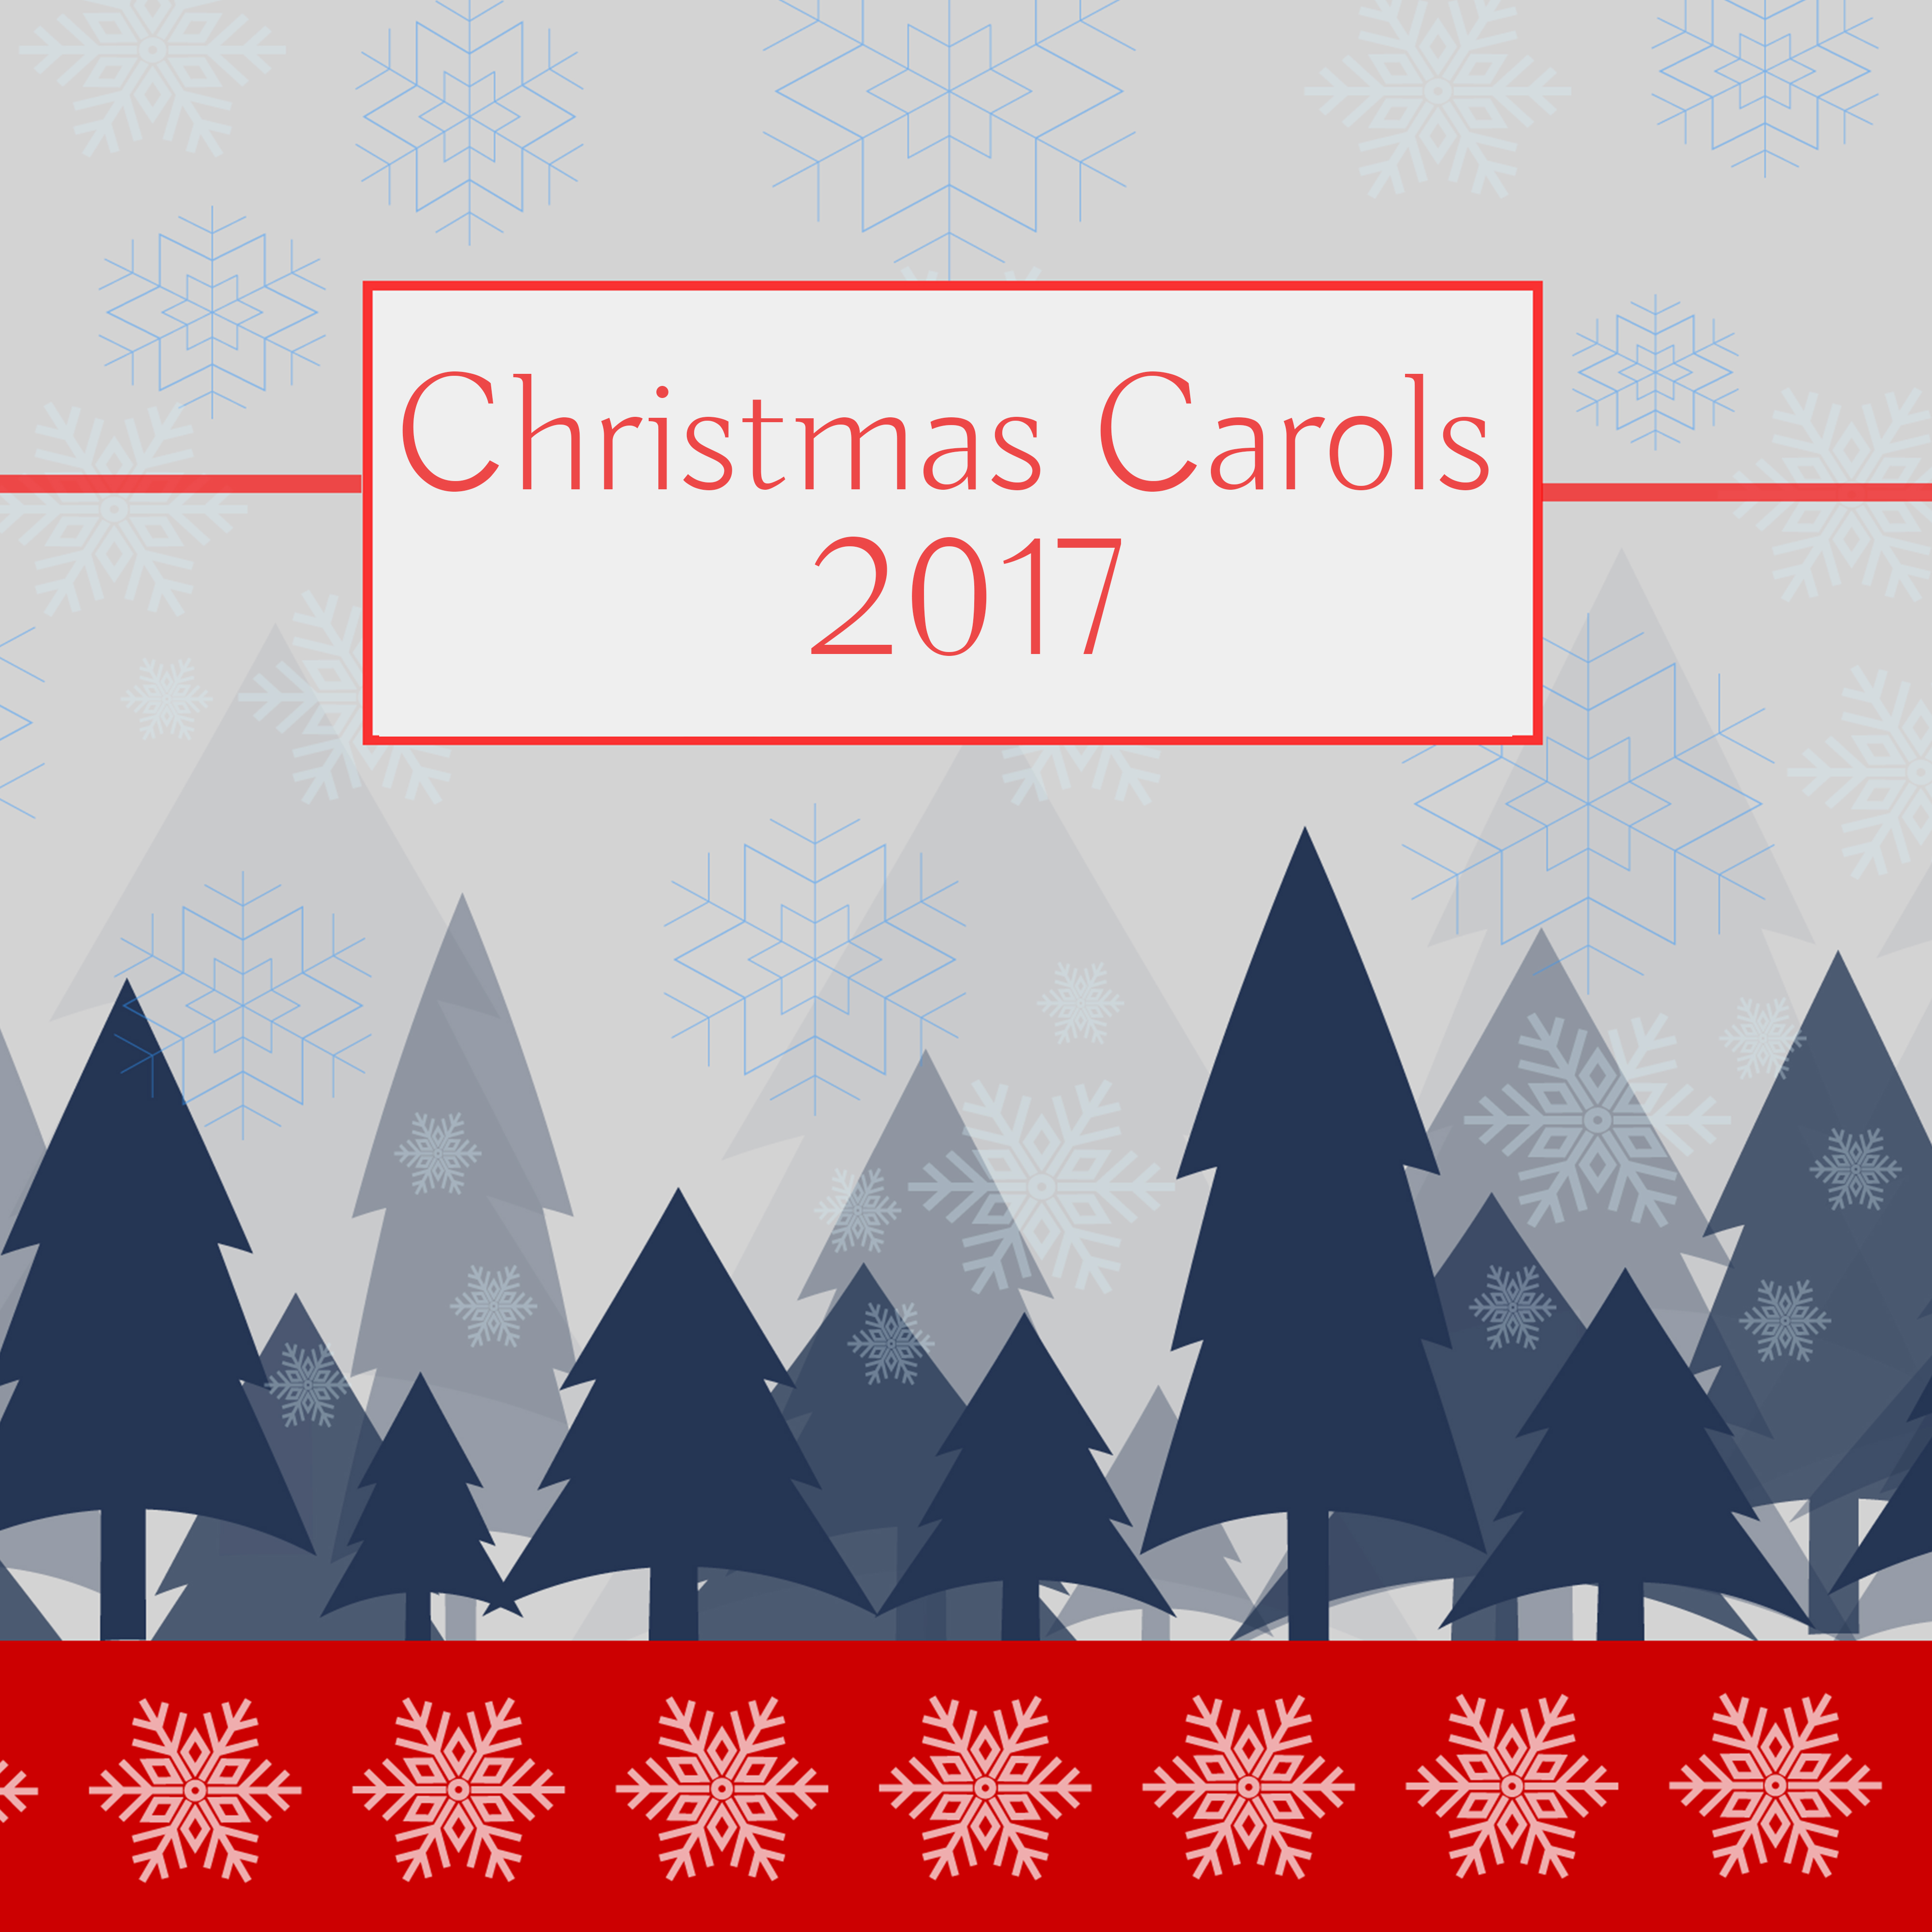 Christmas Carols 2017